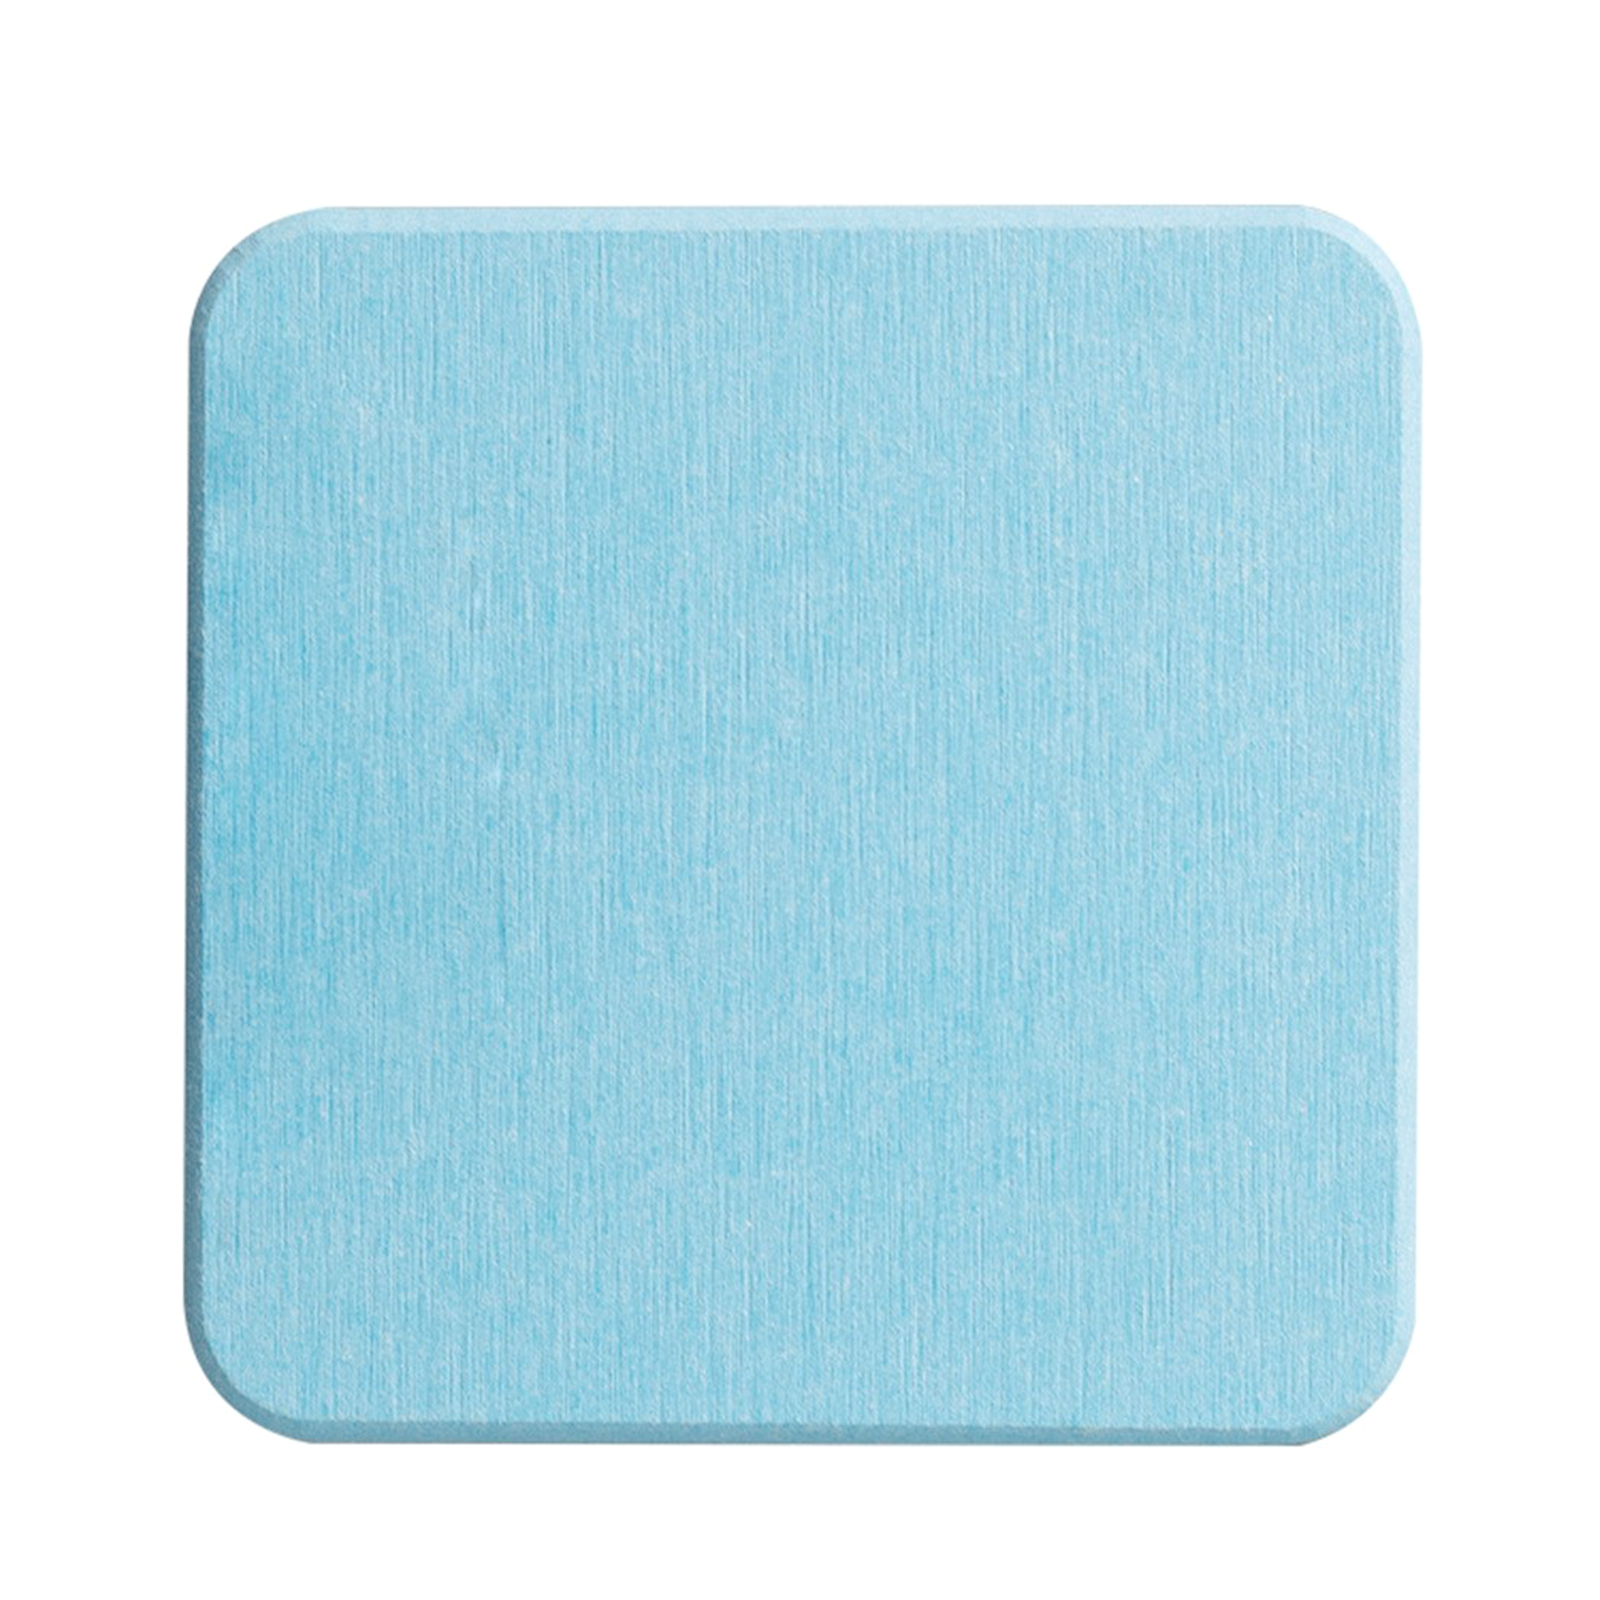 (Set of 6) - Diatomaceous Cup Coaster (Blue)